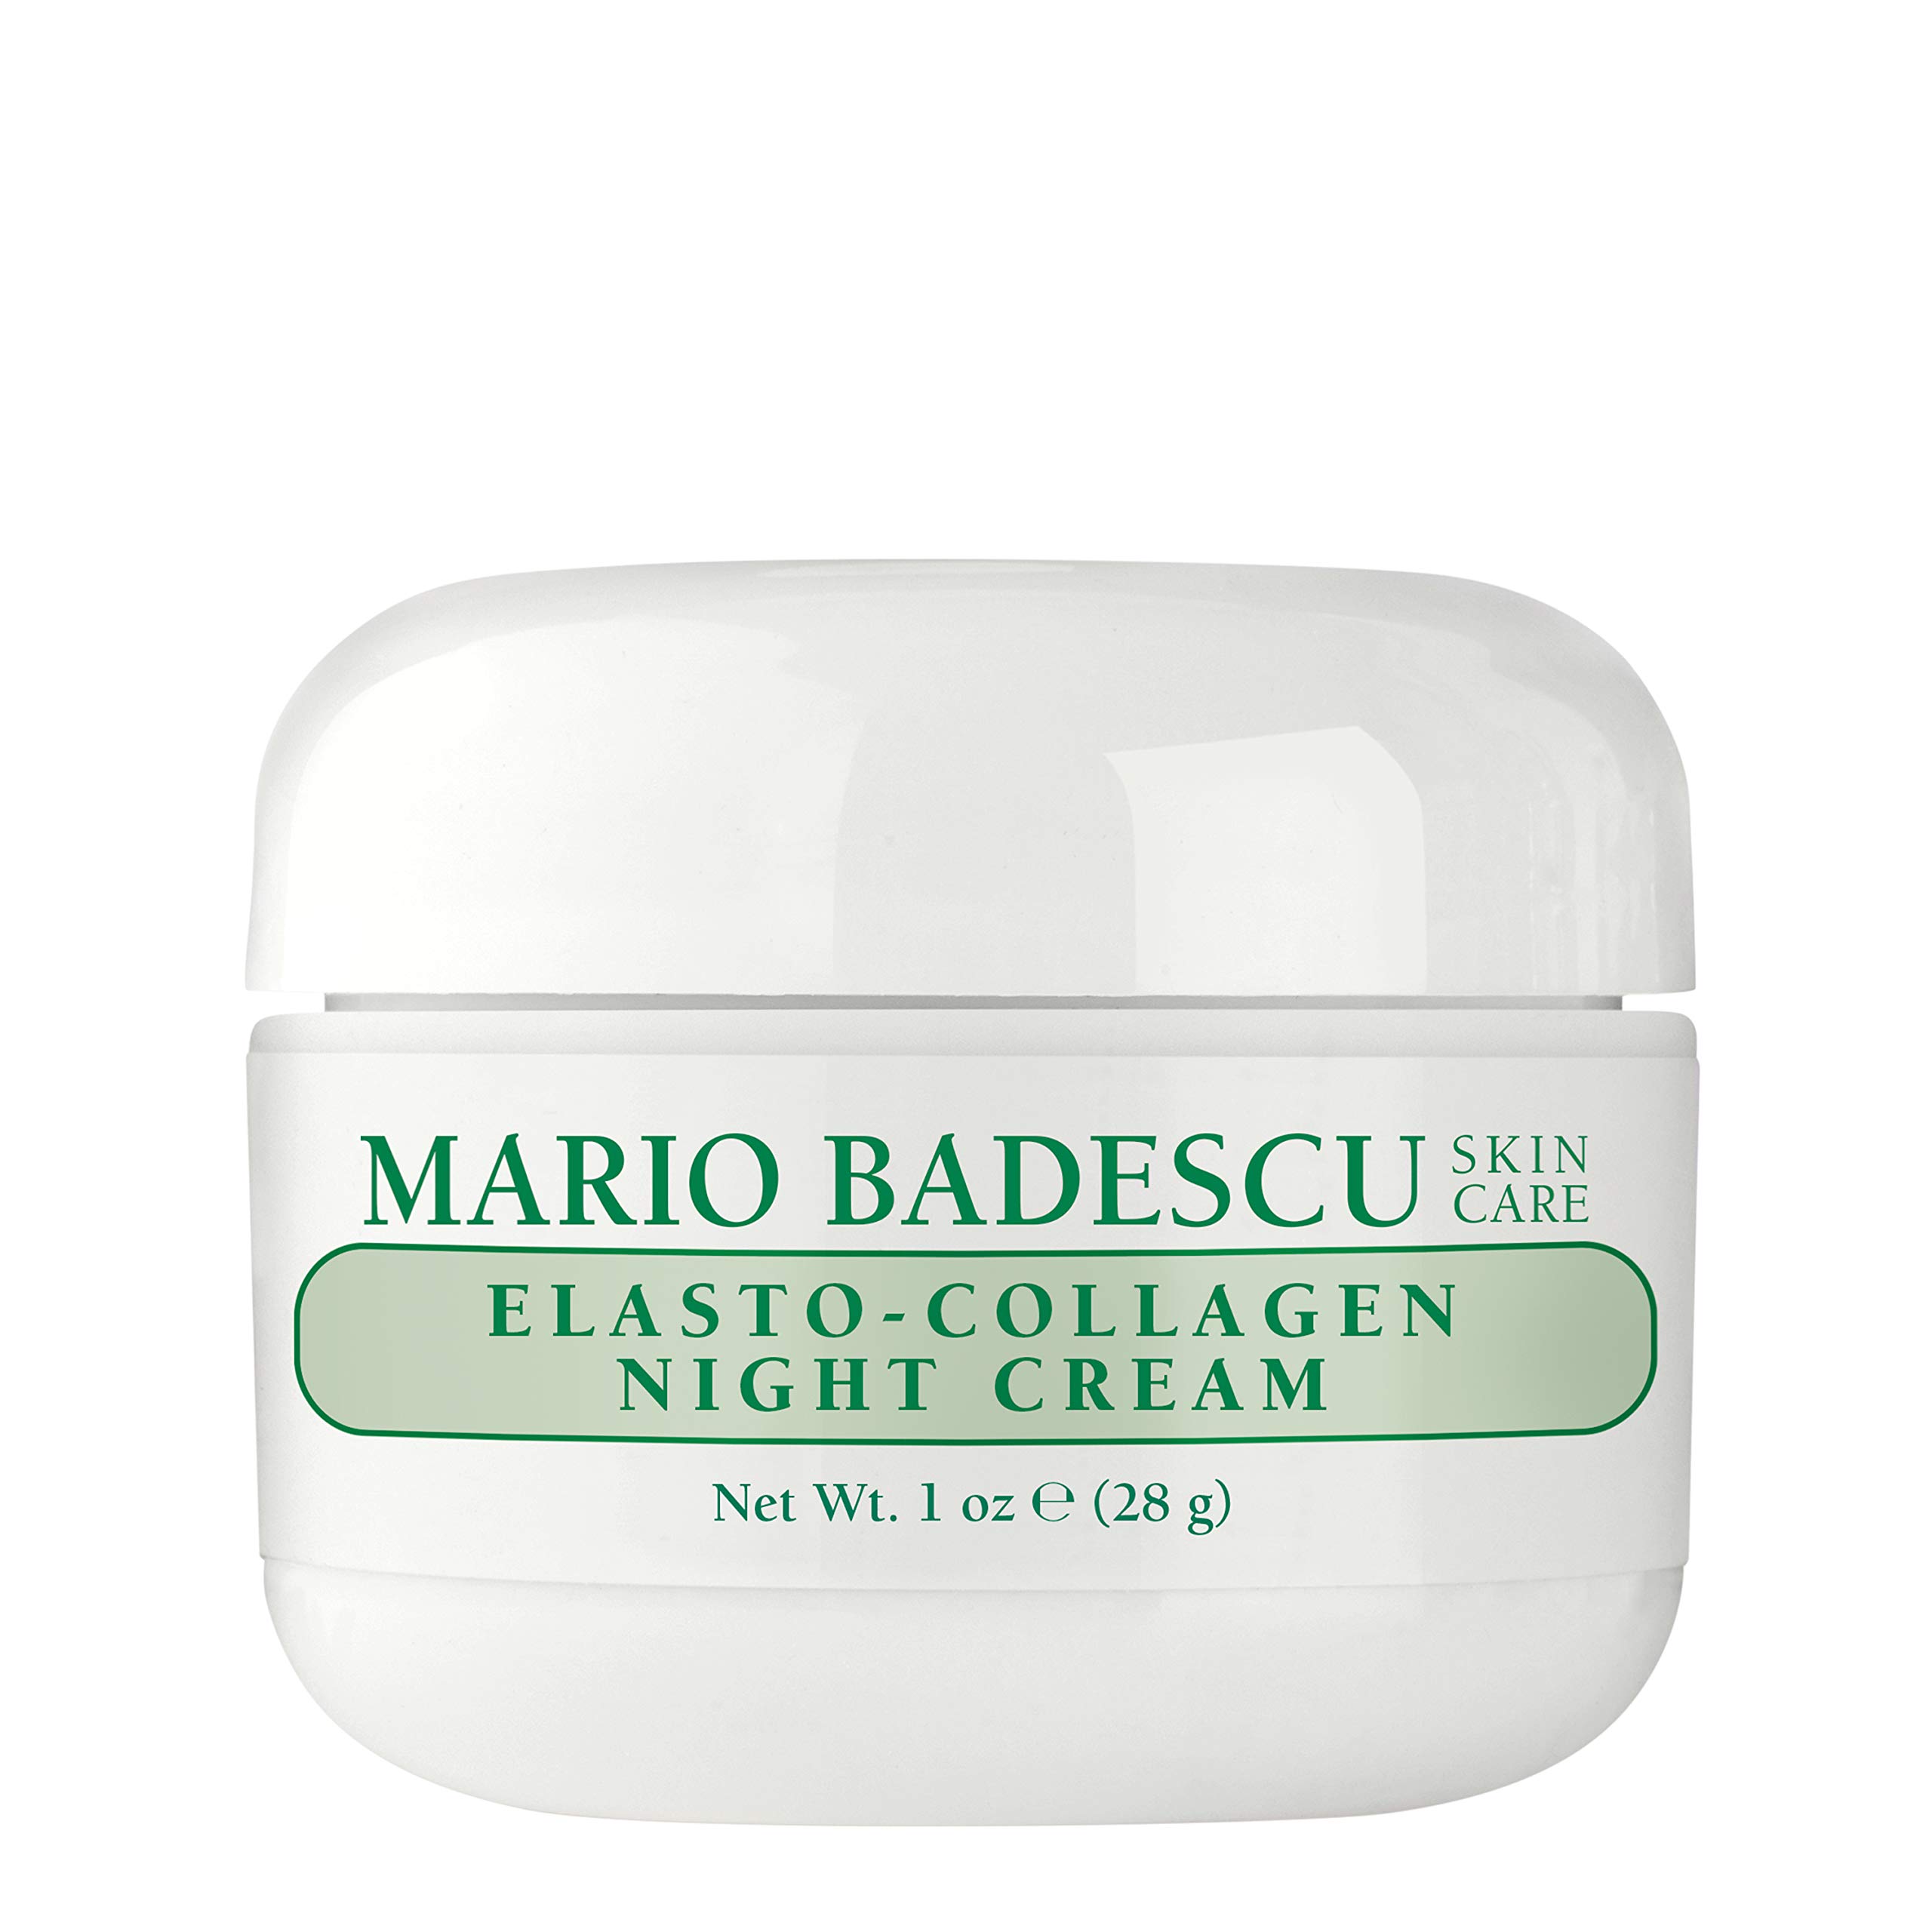 Mario Badescu Elasto-Collagen Night Cream, Anti Aging Collagen Cream for Dry or Sensitive Skin, Facial Skin Care Infused with Vitamin E Moisturizer, 1 Oz